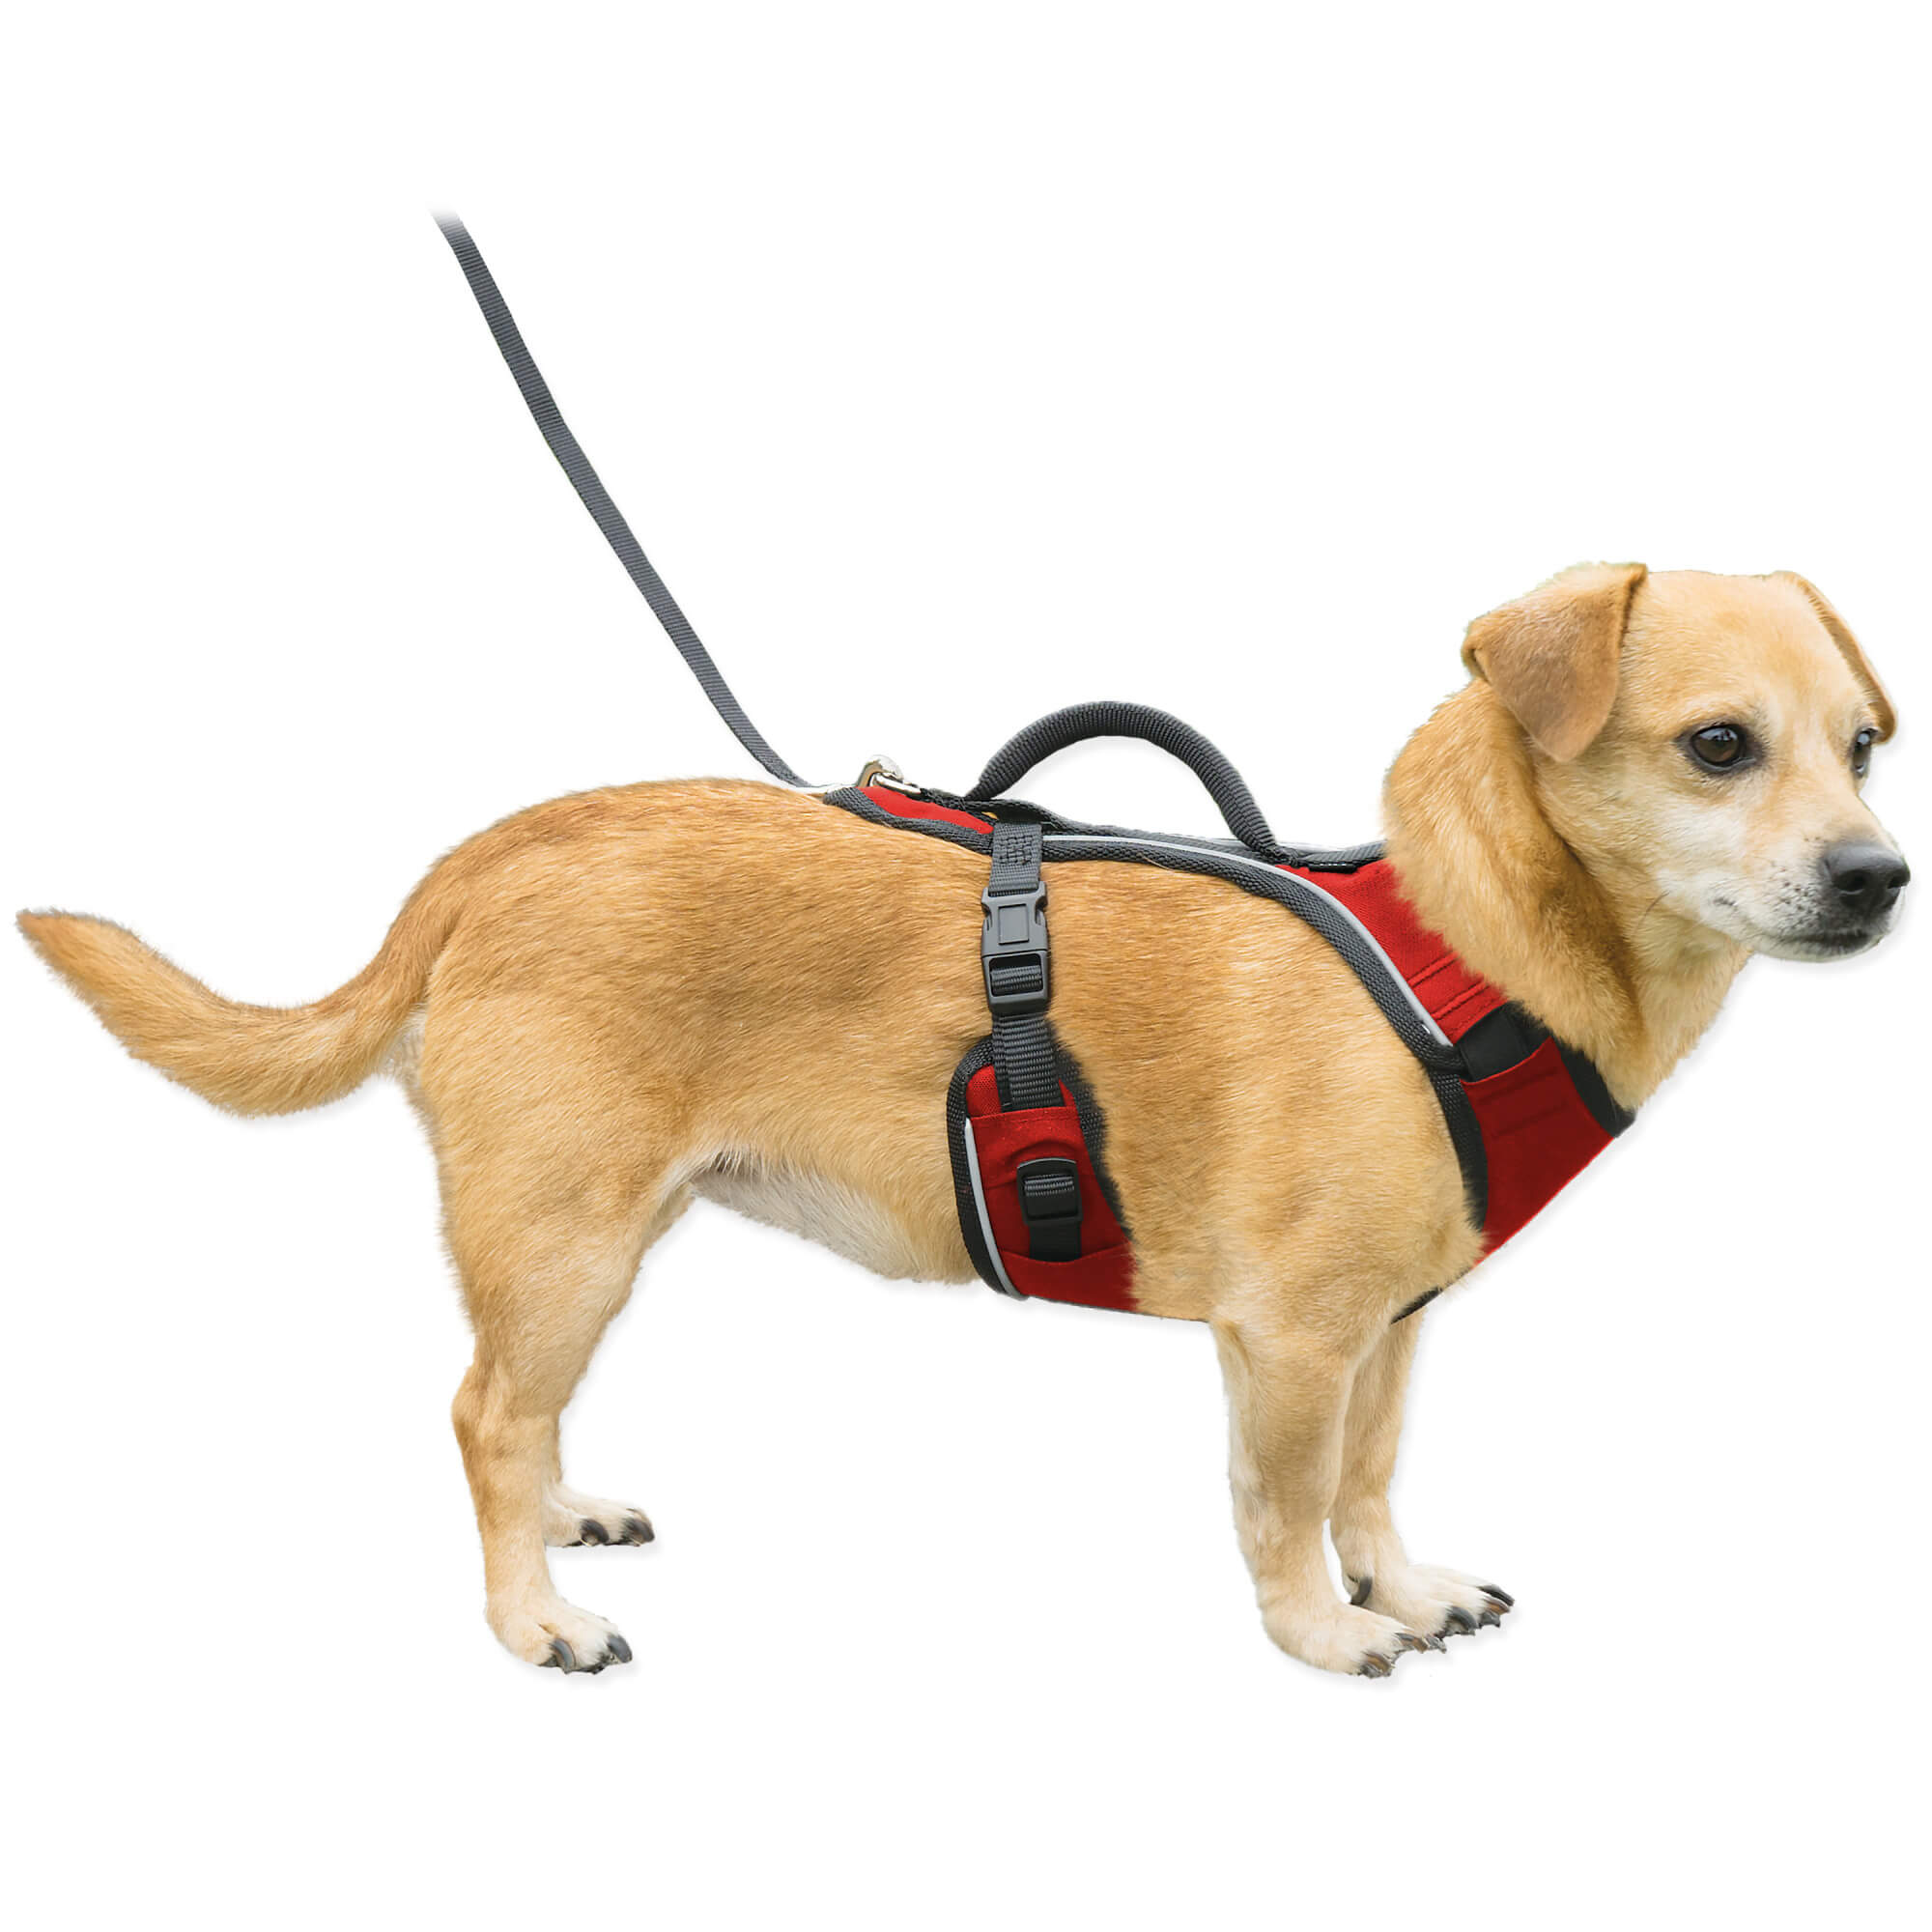 Dog wearing red petsafe easysport harness in xsmall